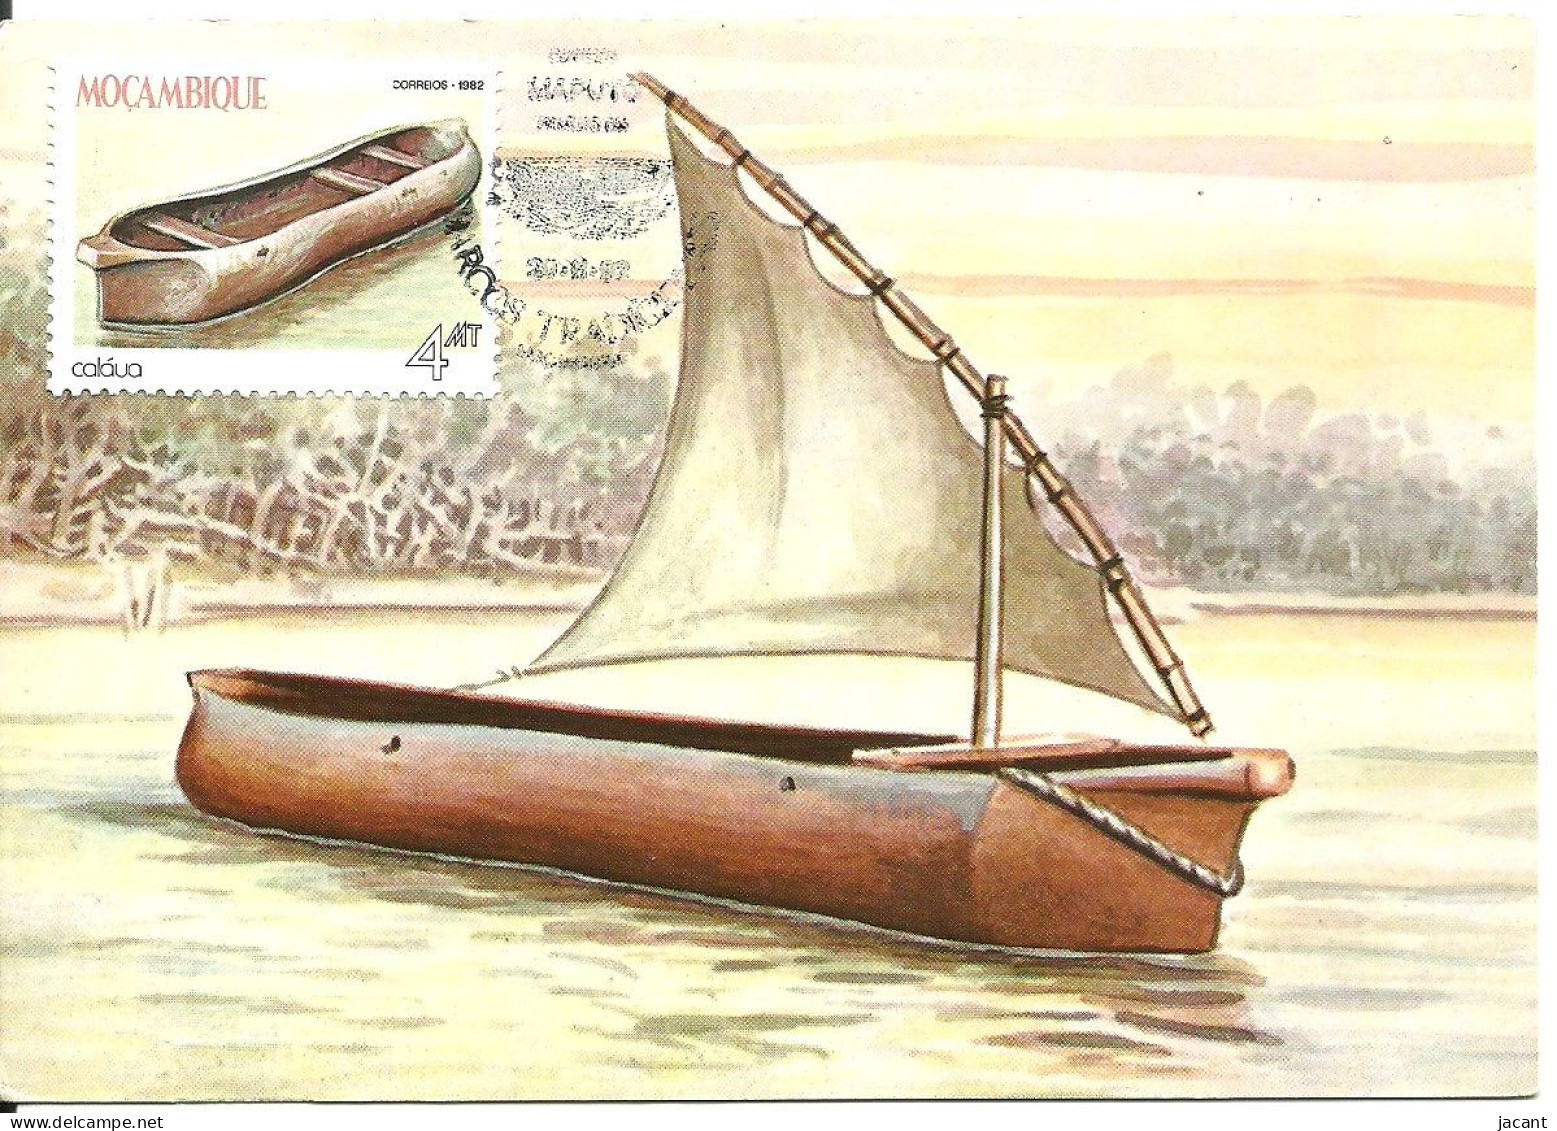 Carte Maximum - Mocambique Mozambique - Calaua Barco Tradicional - Bateau Traditionnel - Traditional Boat - Mozambique